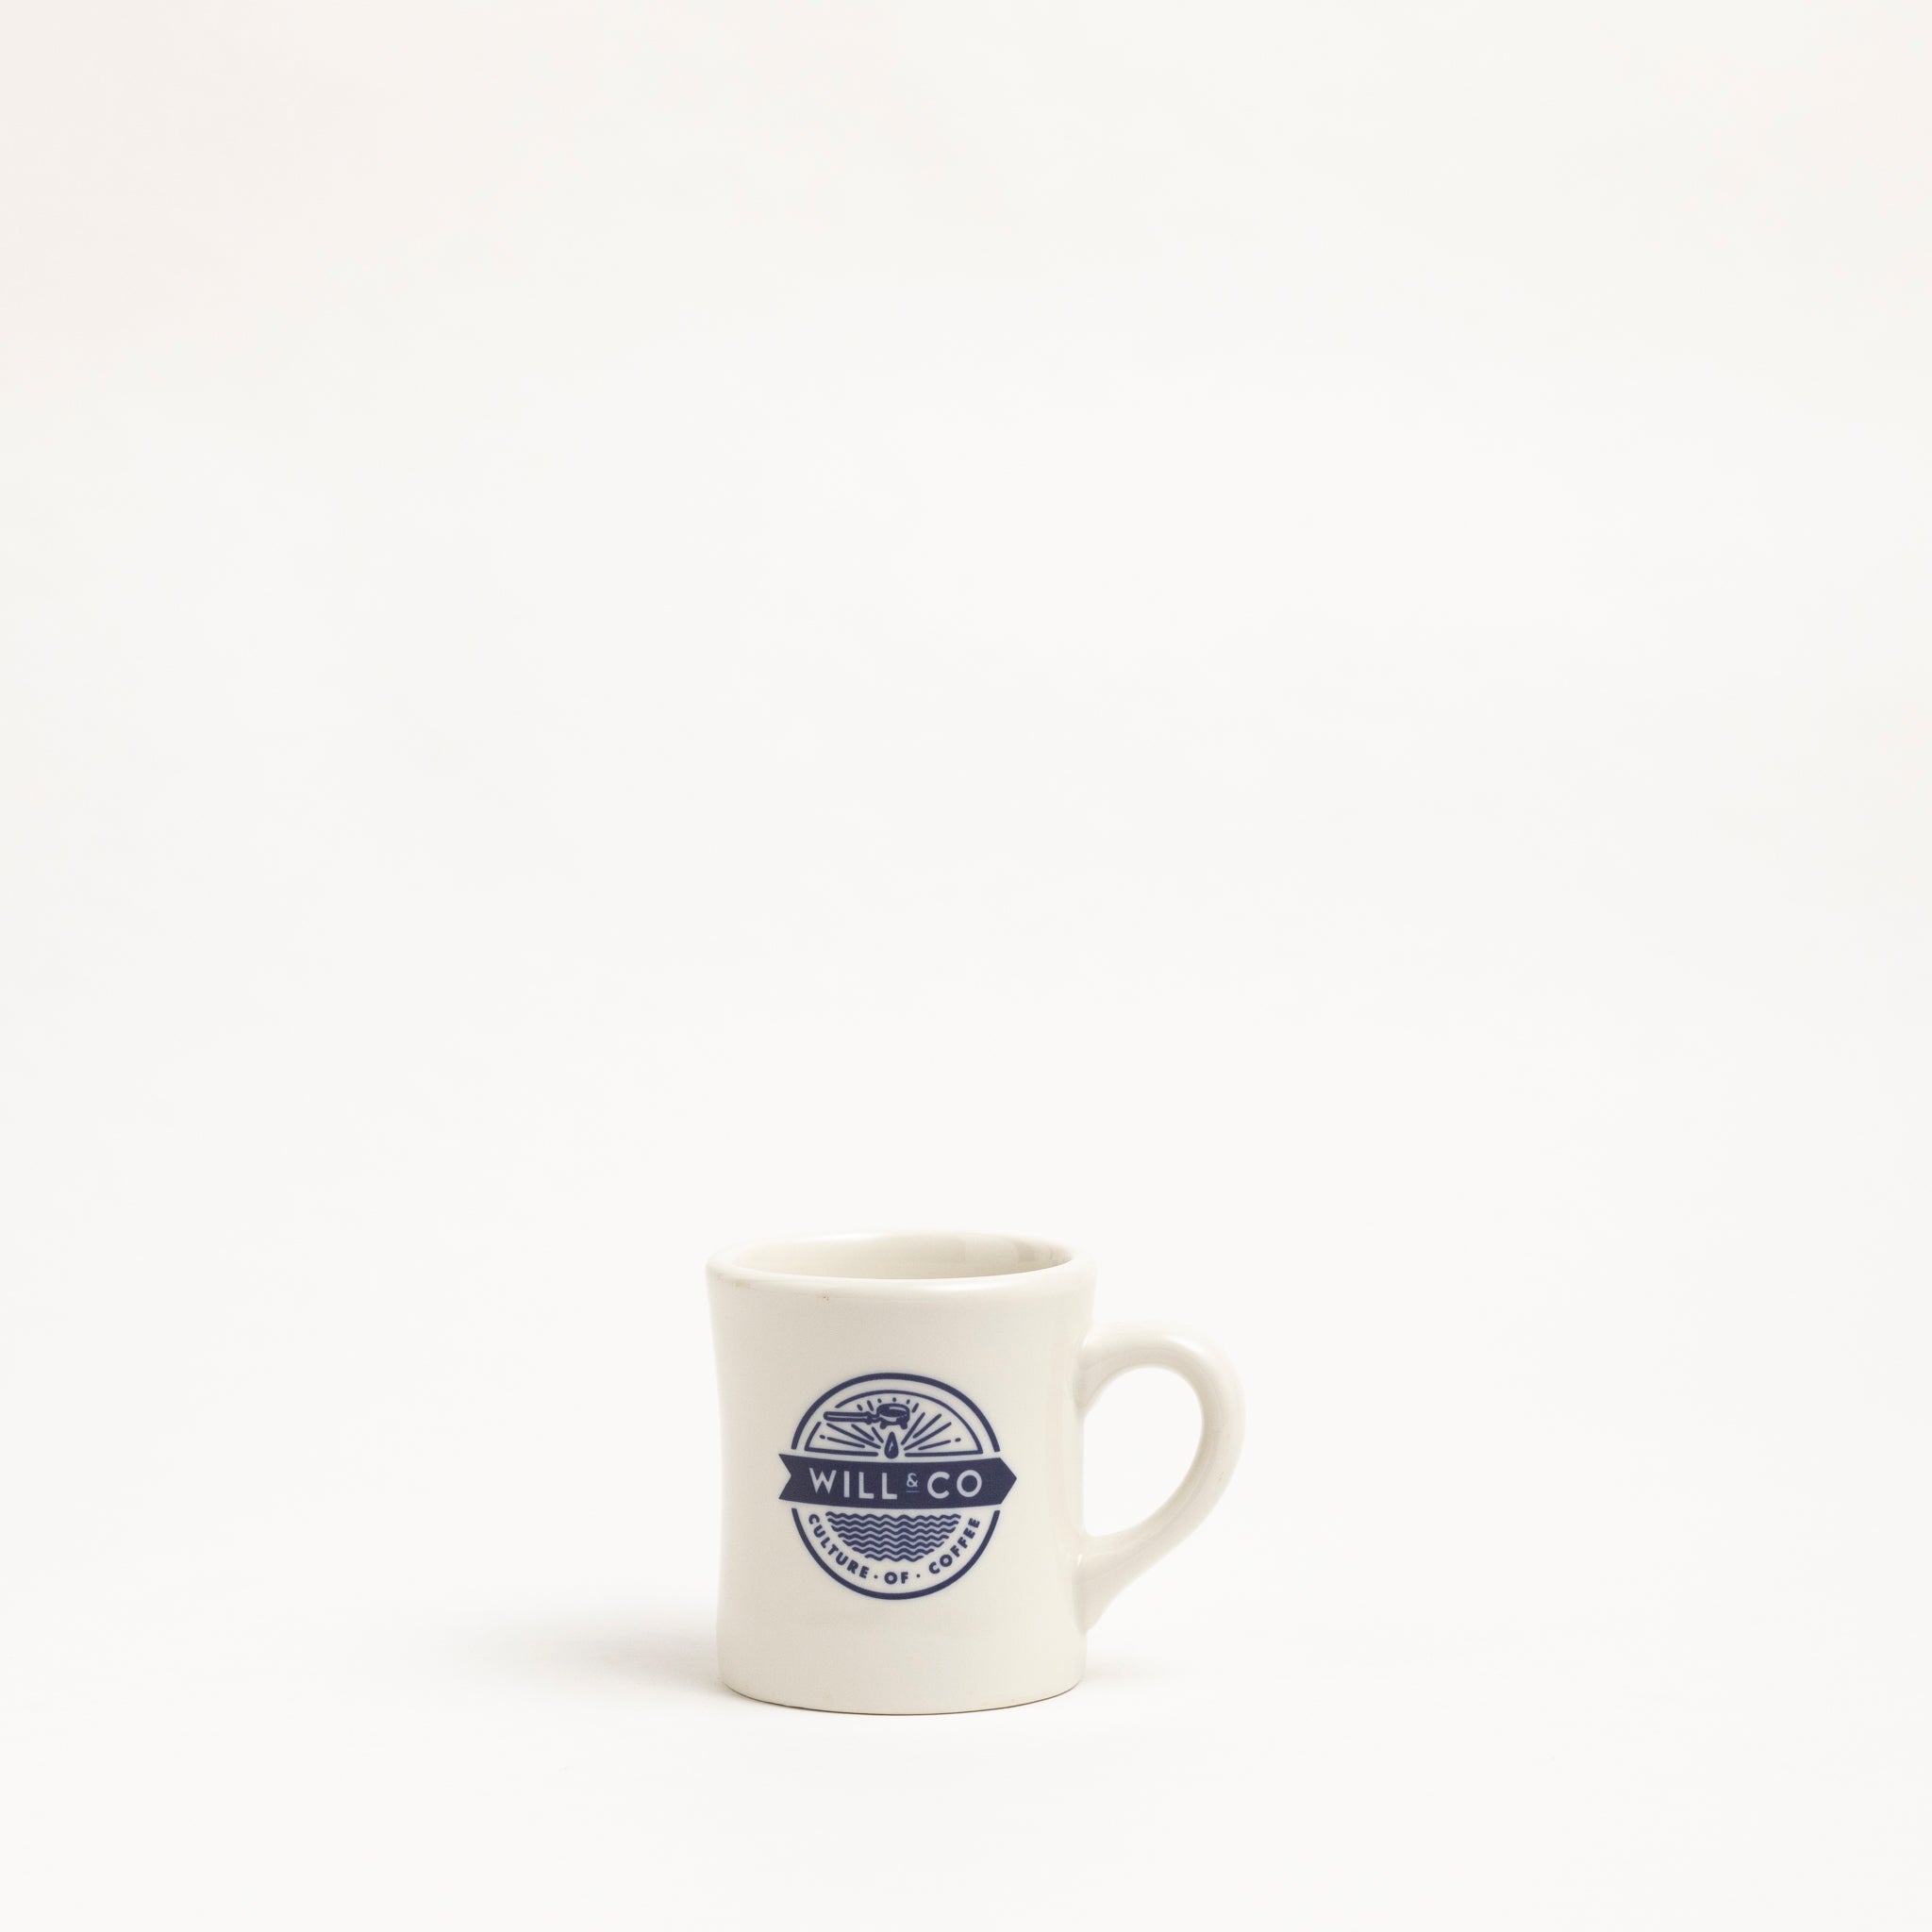 American Diner Mug - Will & Co Coffee